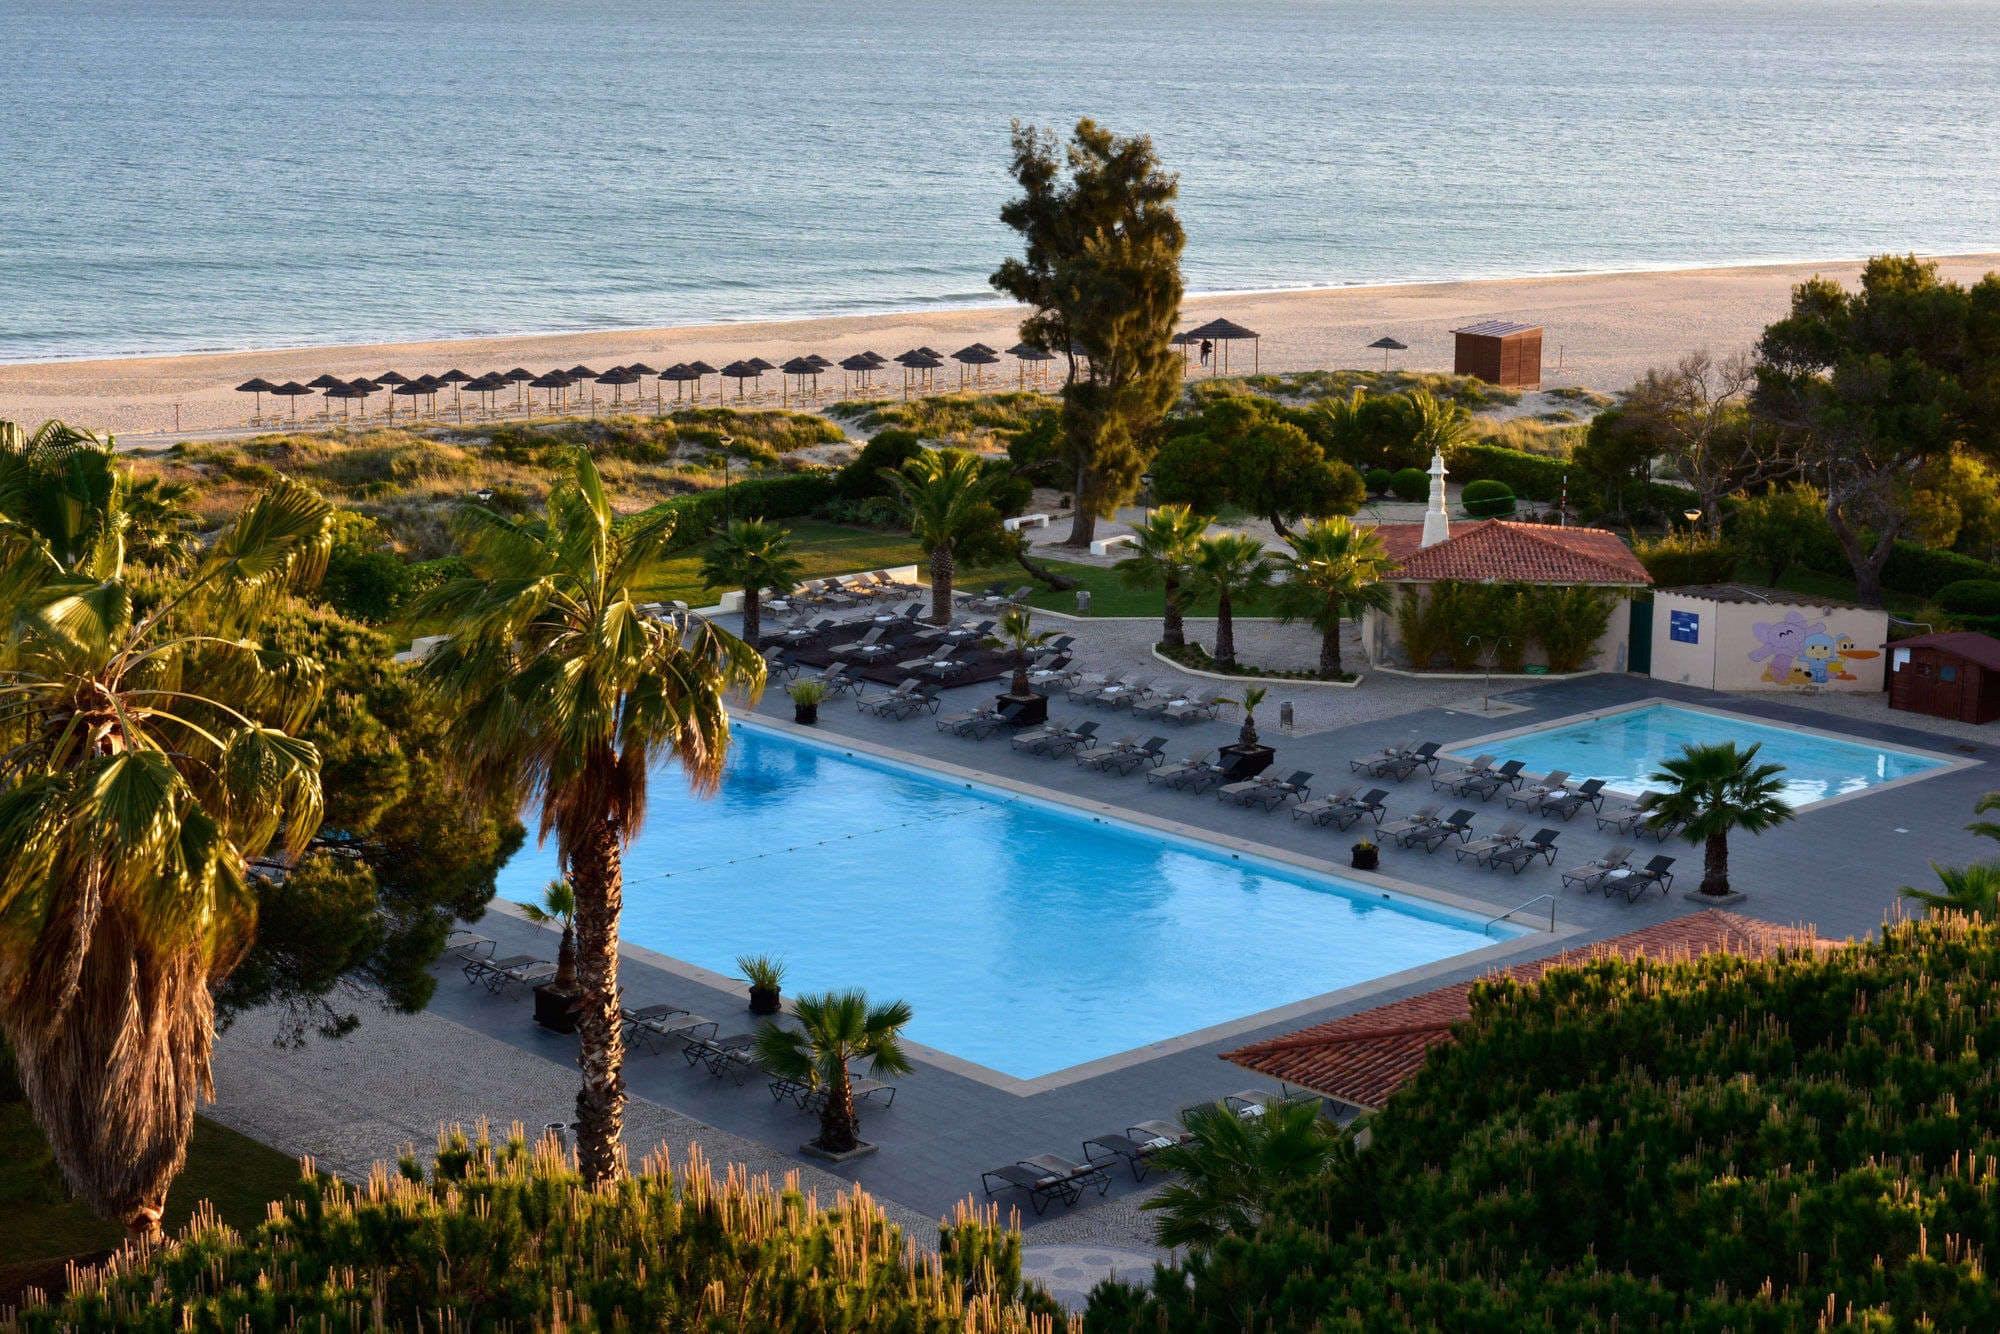 View Pestana Dom Joao II Hotel's picturesque outdoor pool within vibrant Algarve.